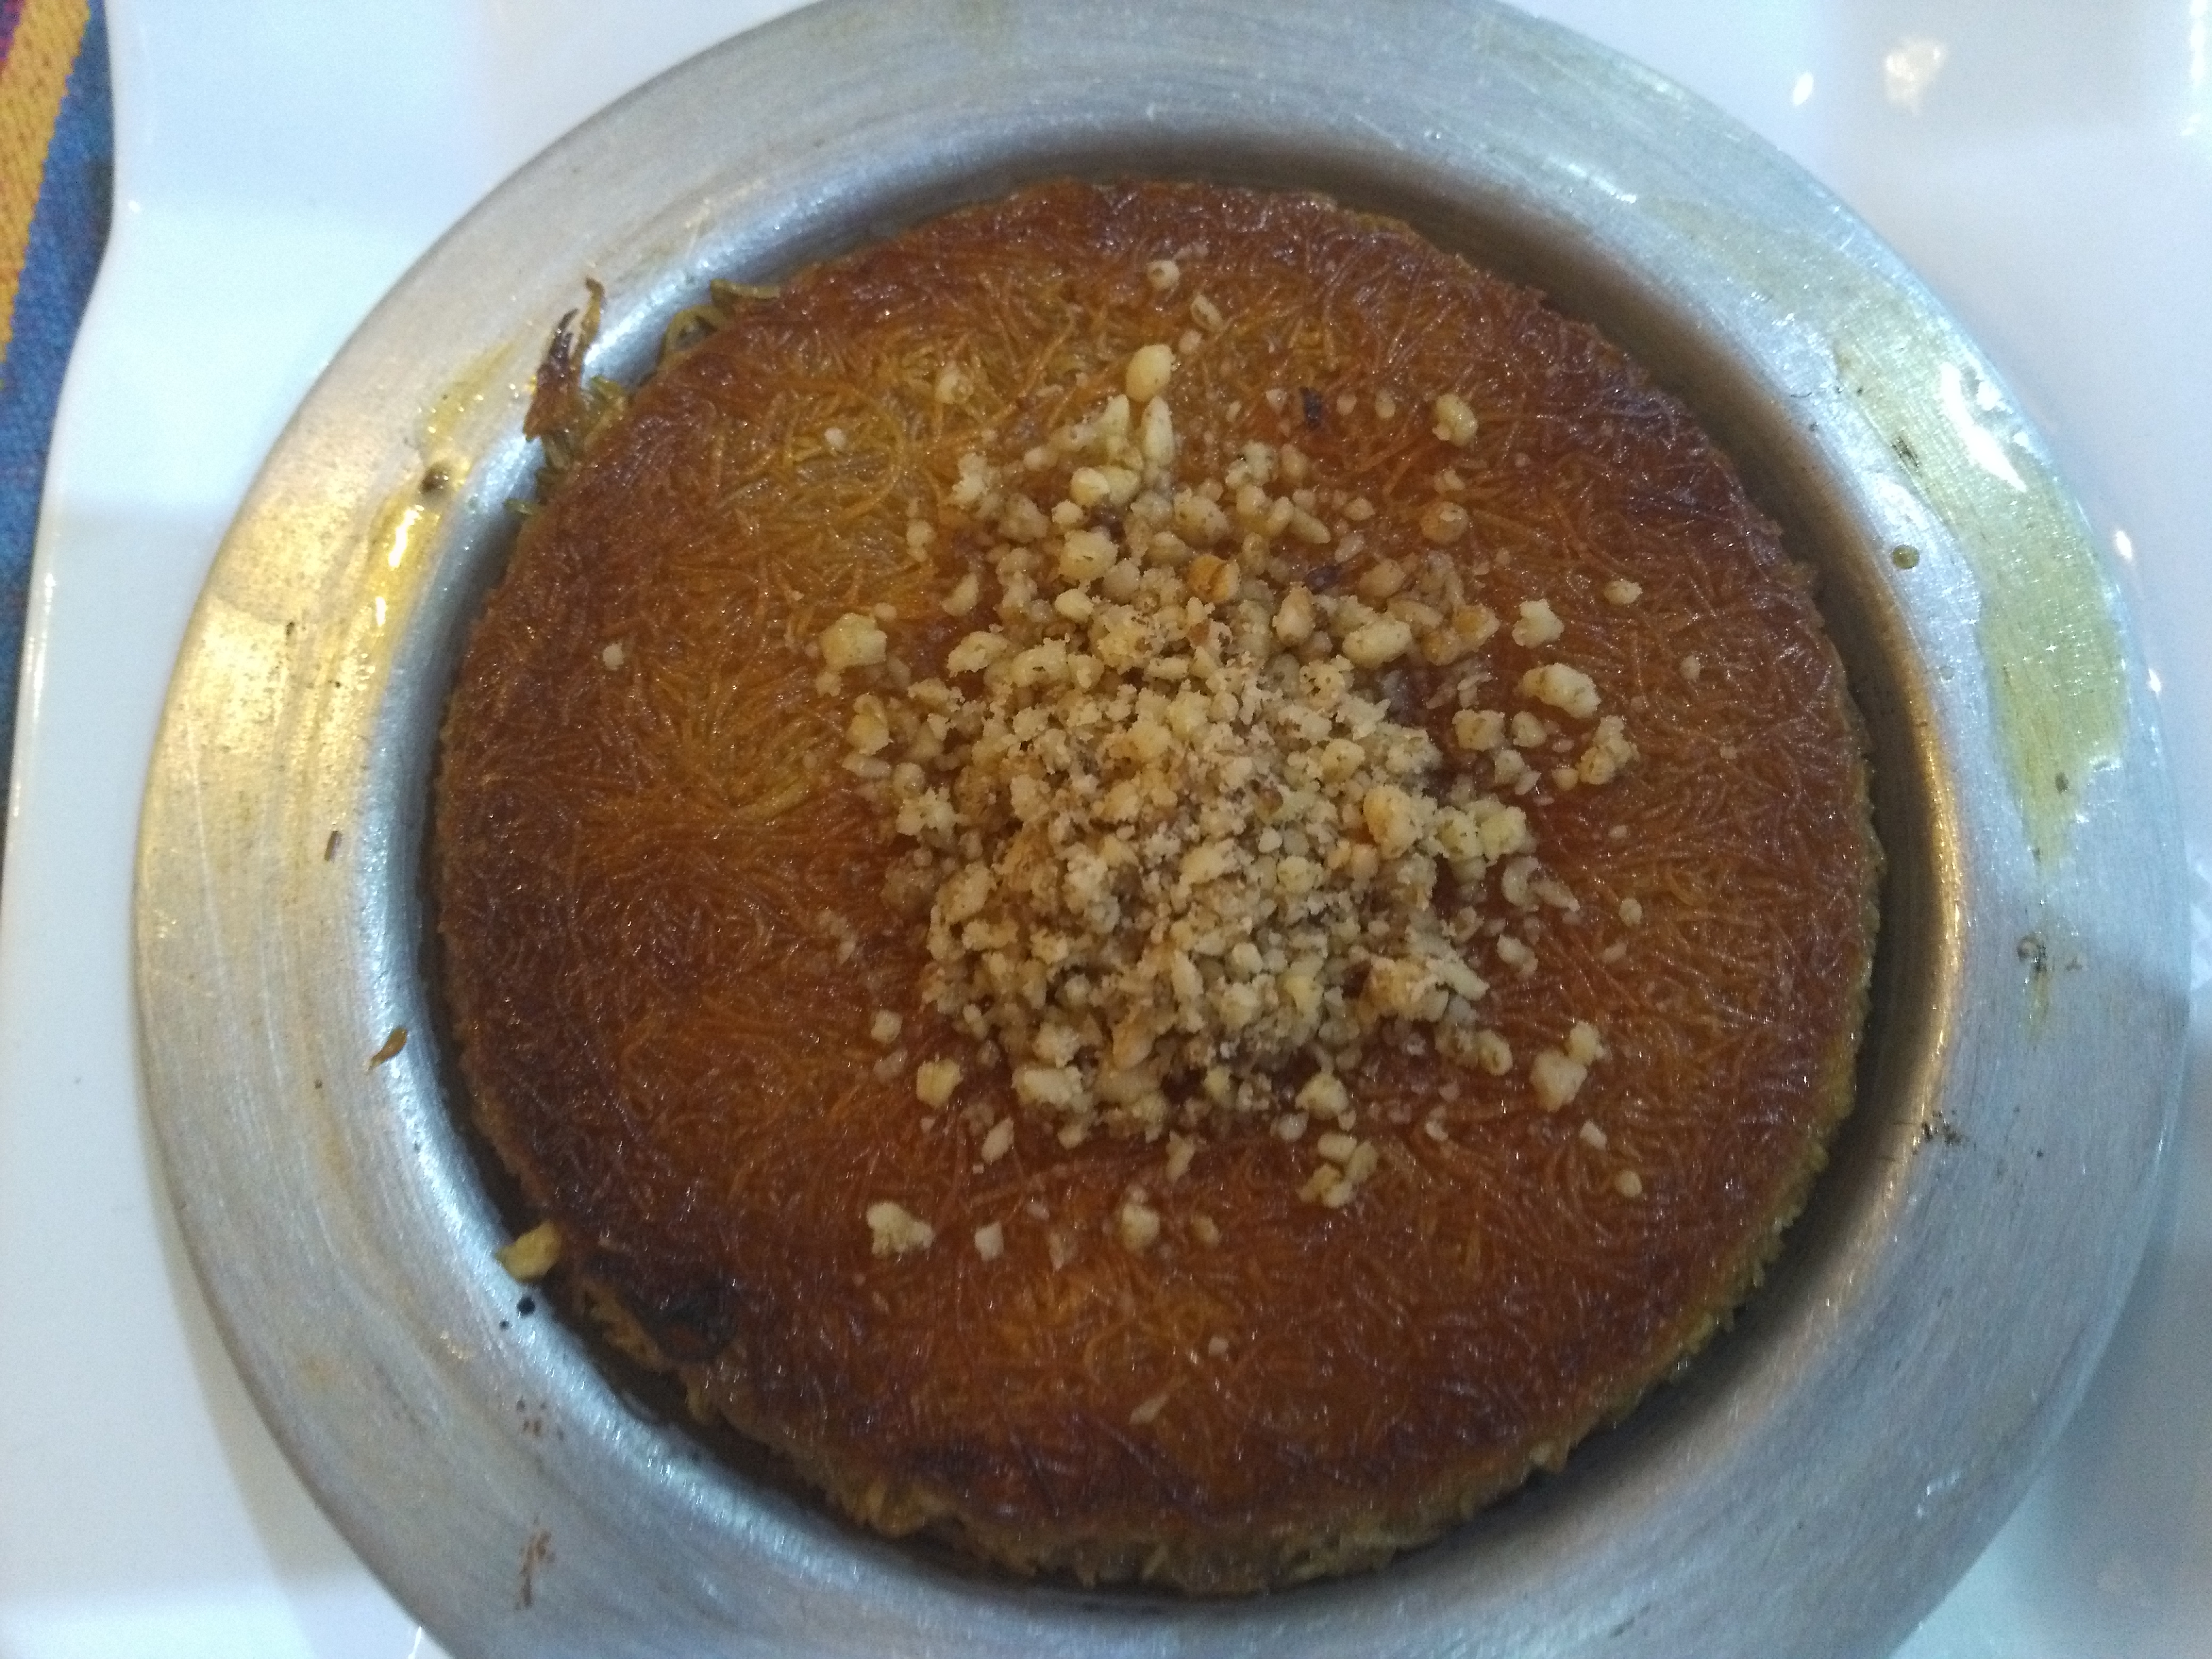 Hatay Künefe - a Turkish dessert that curiously resembles jorda shamai.